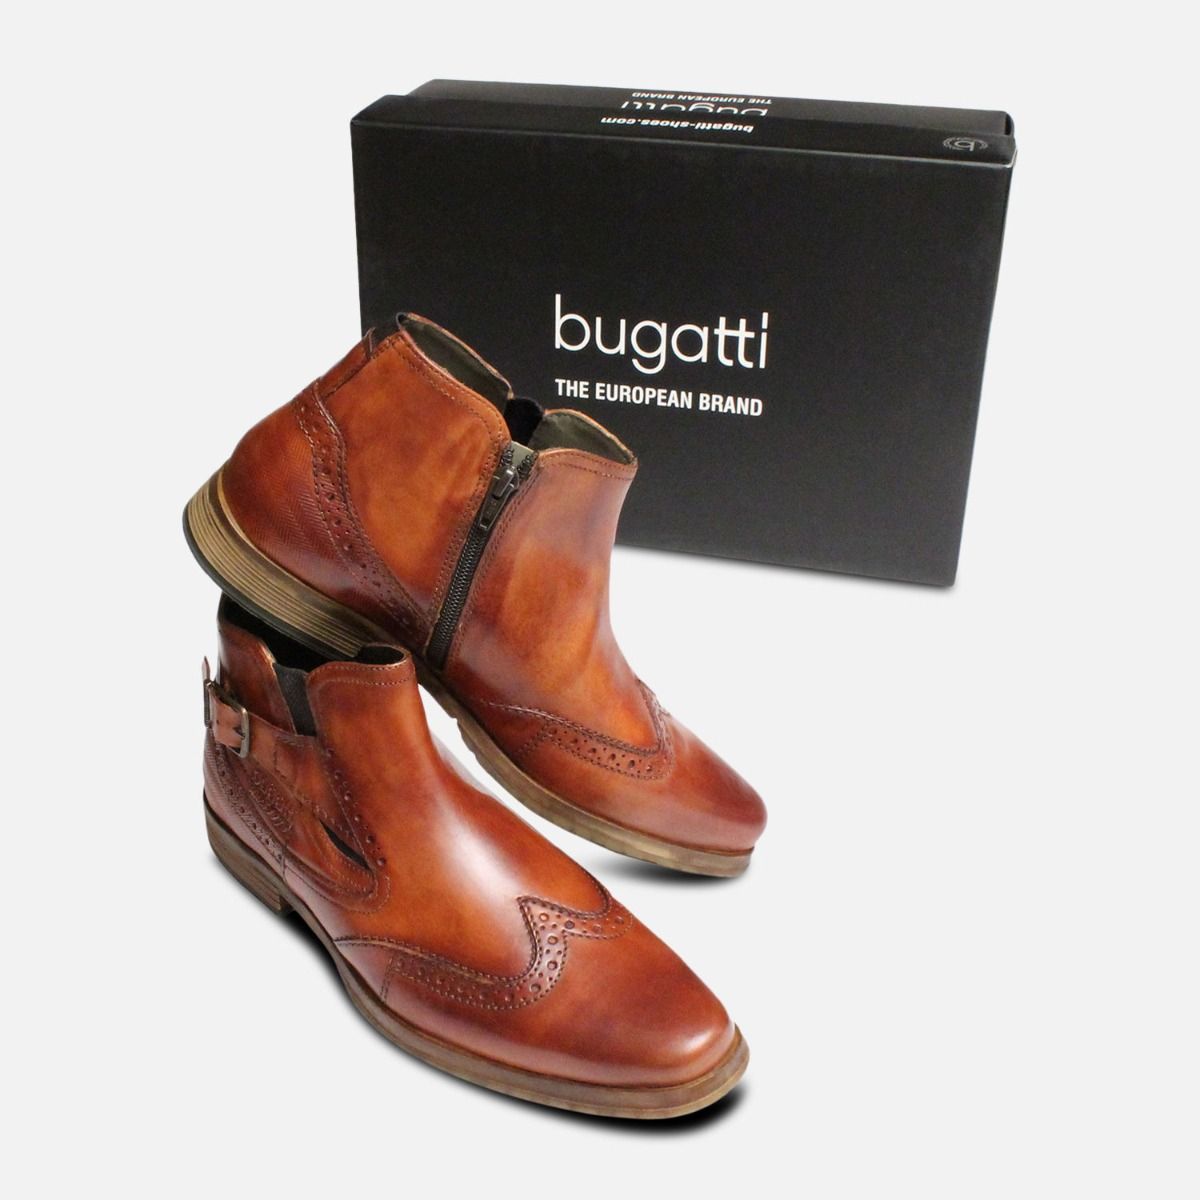 bugatti shoes brand